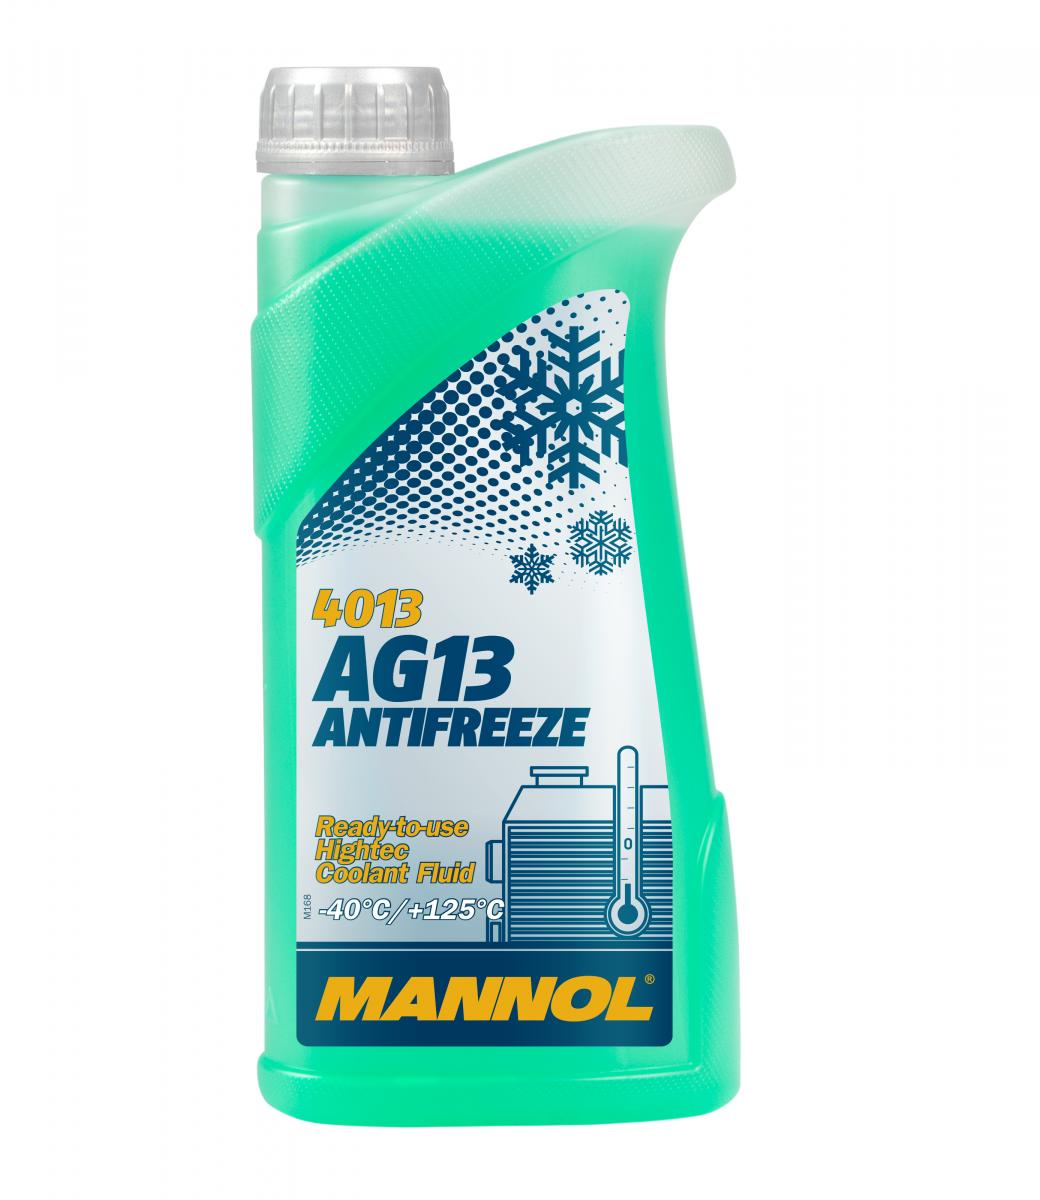 MANNOL Antifreeze AG13 (-40) Hightec 4013